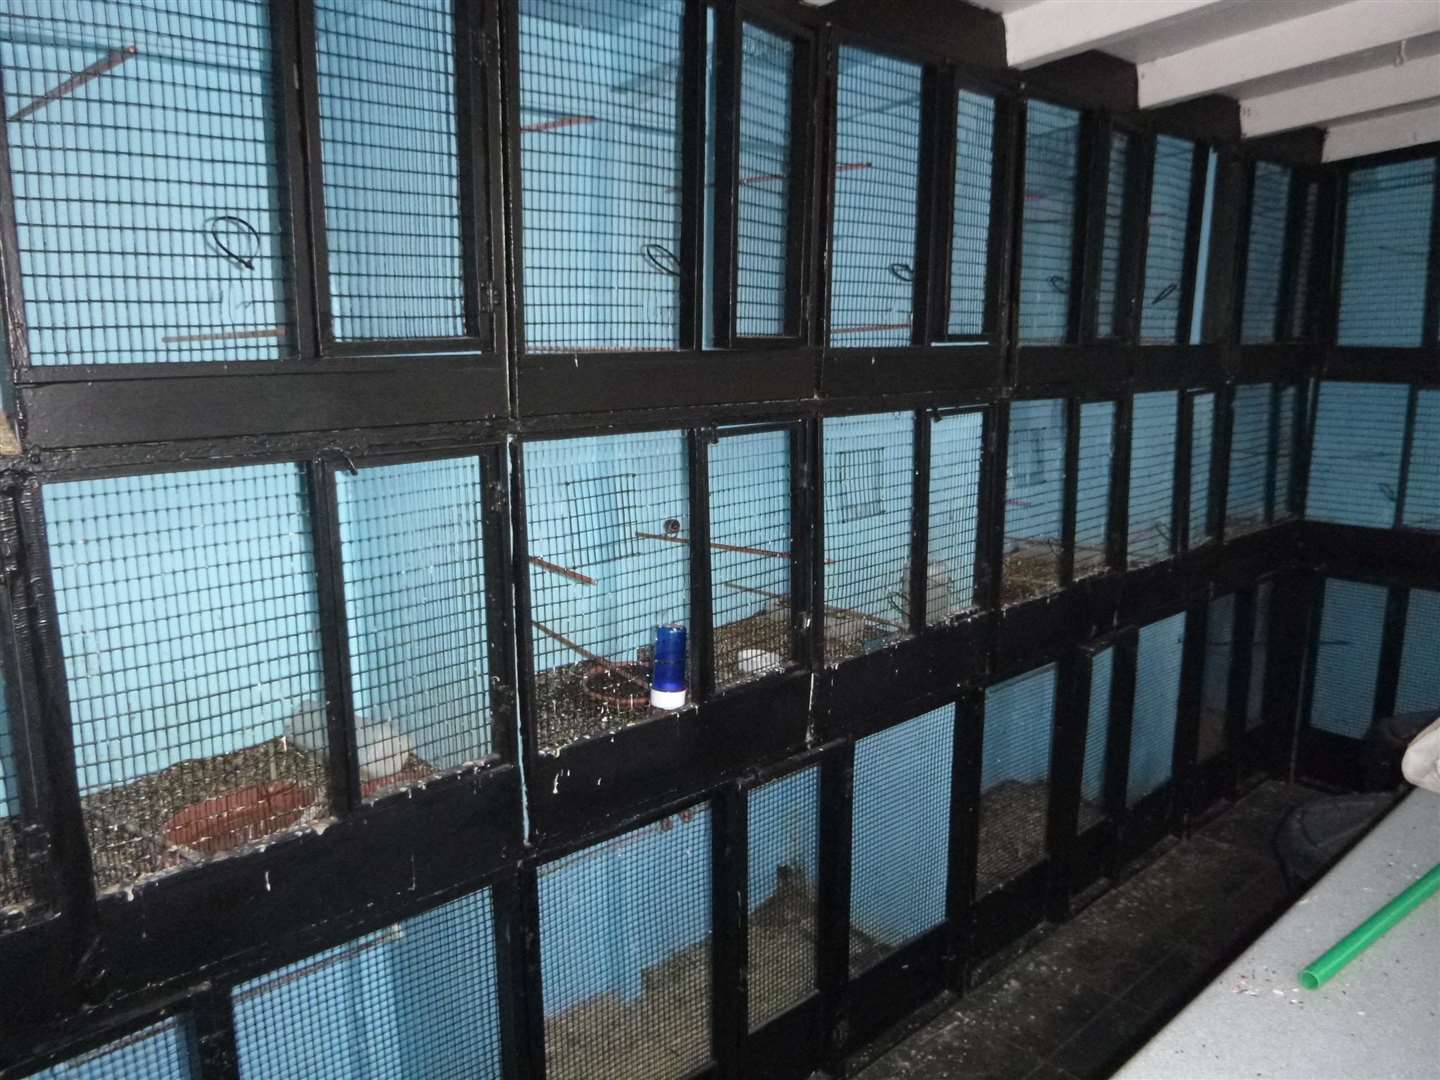 Cages of wild birds